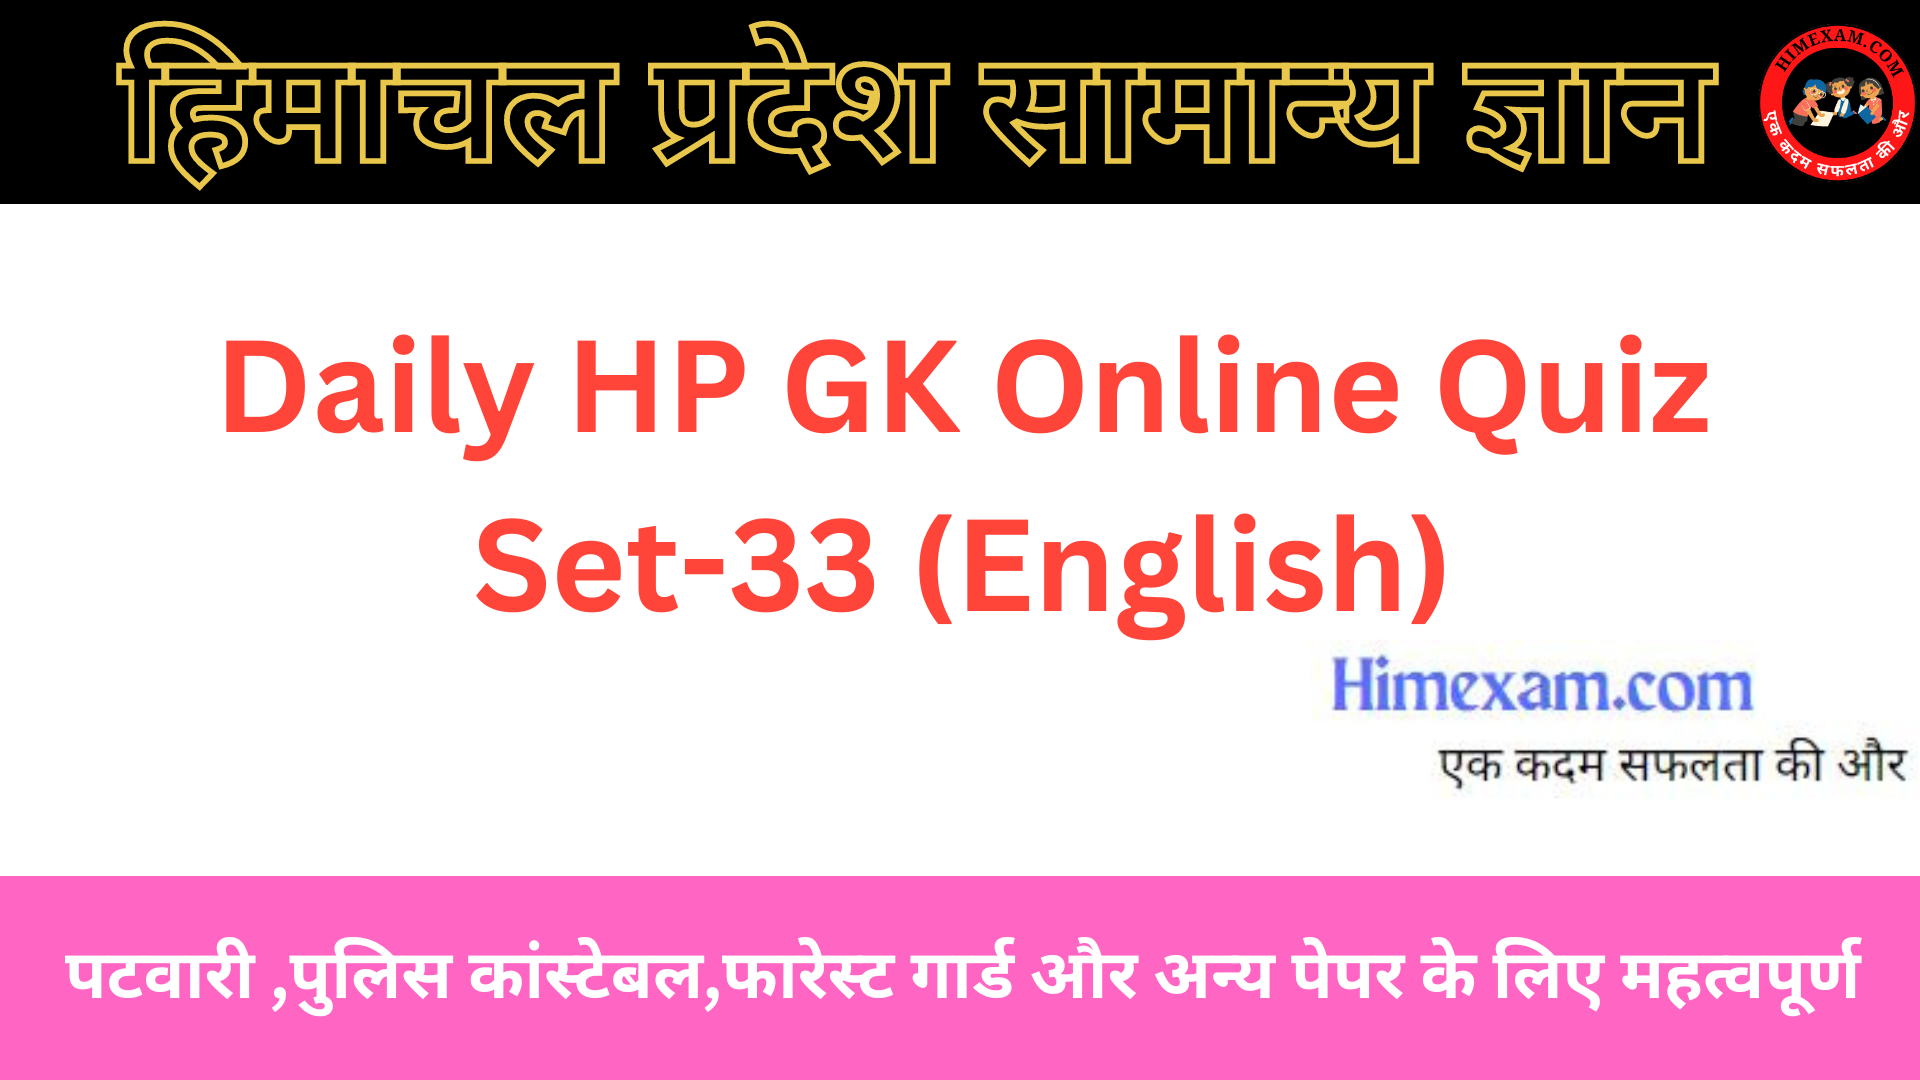 Daily HP GK Online Quiz Set-33 (English)